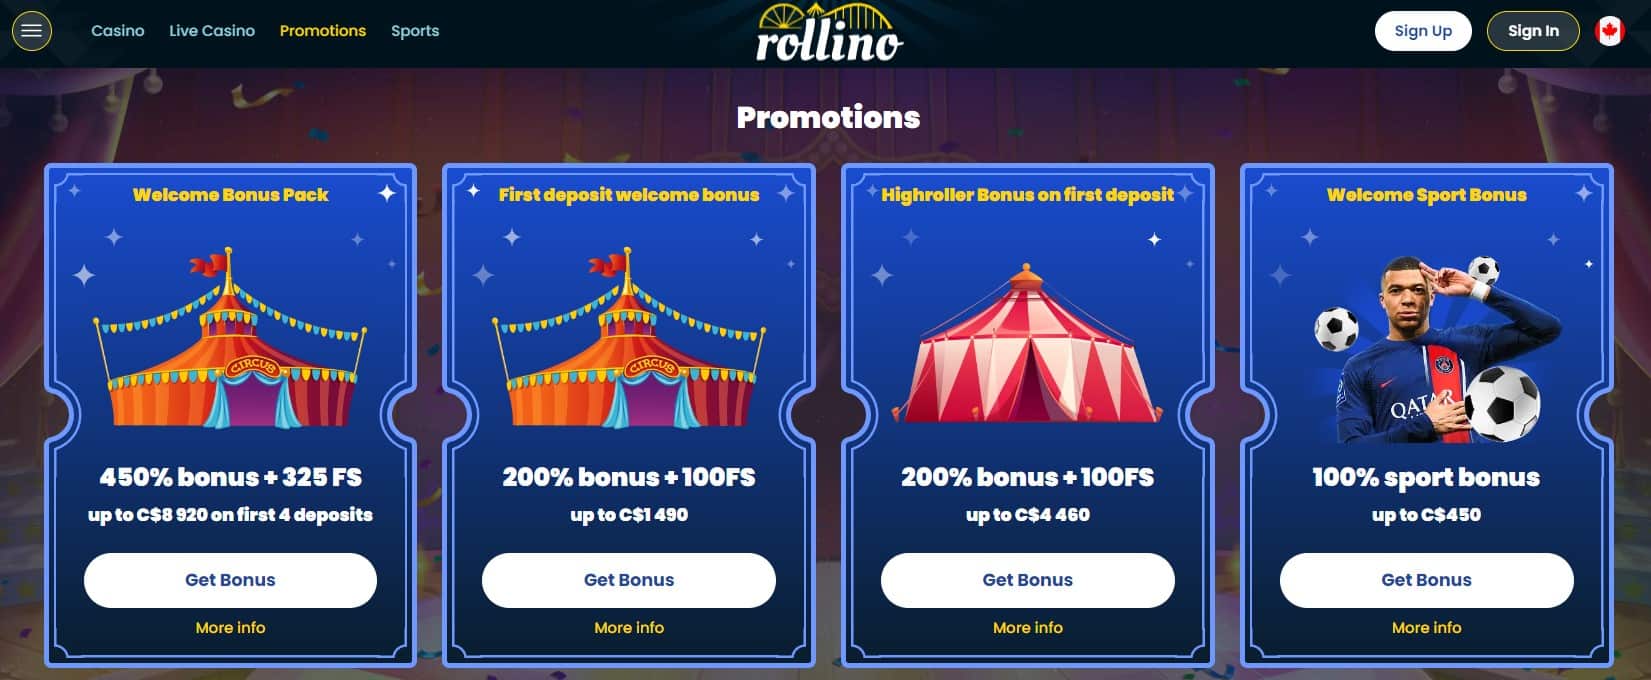 rollino casino promotions